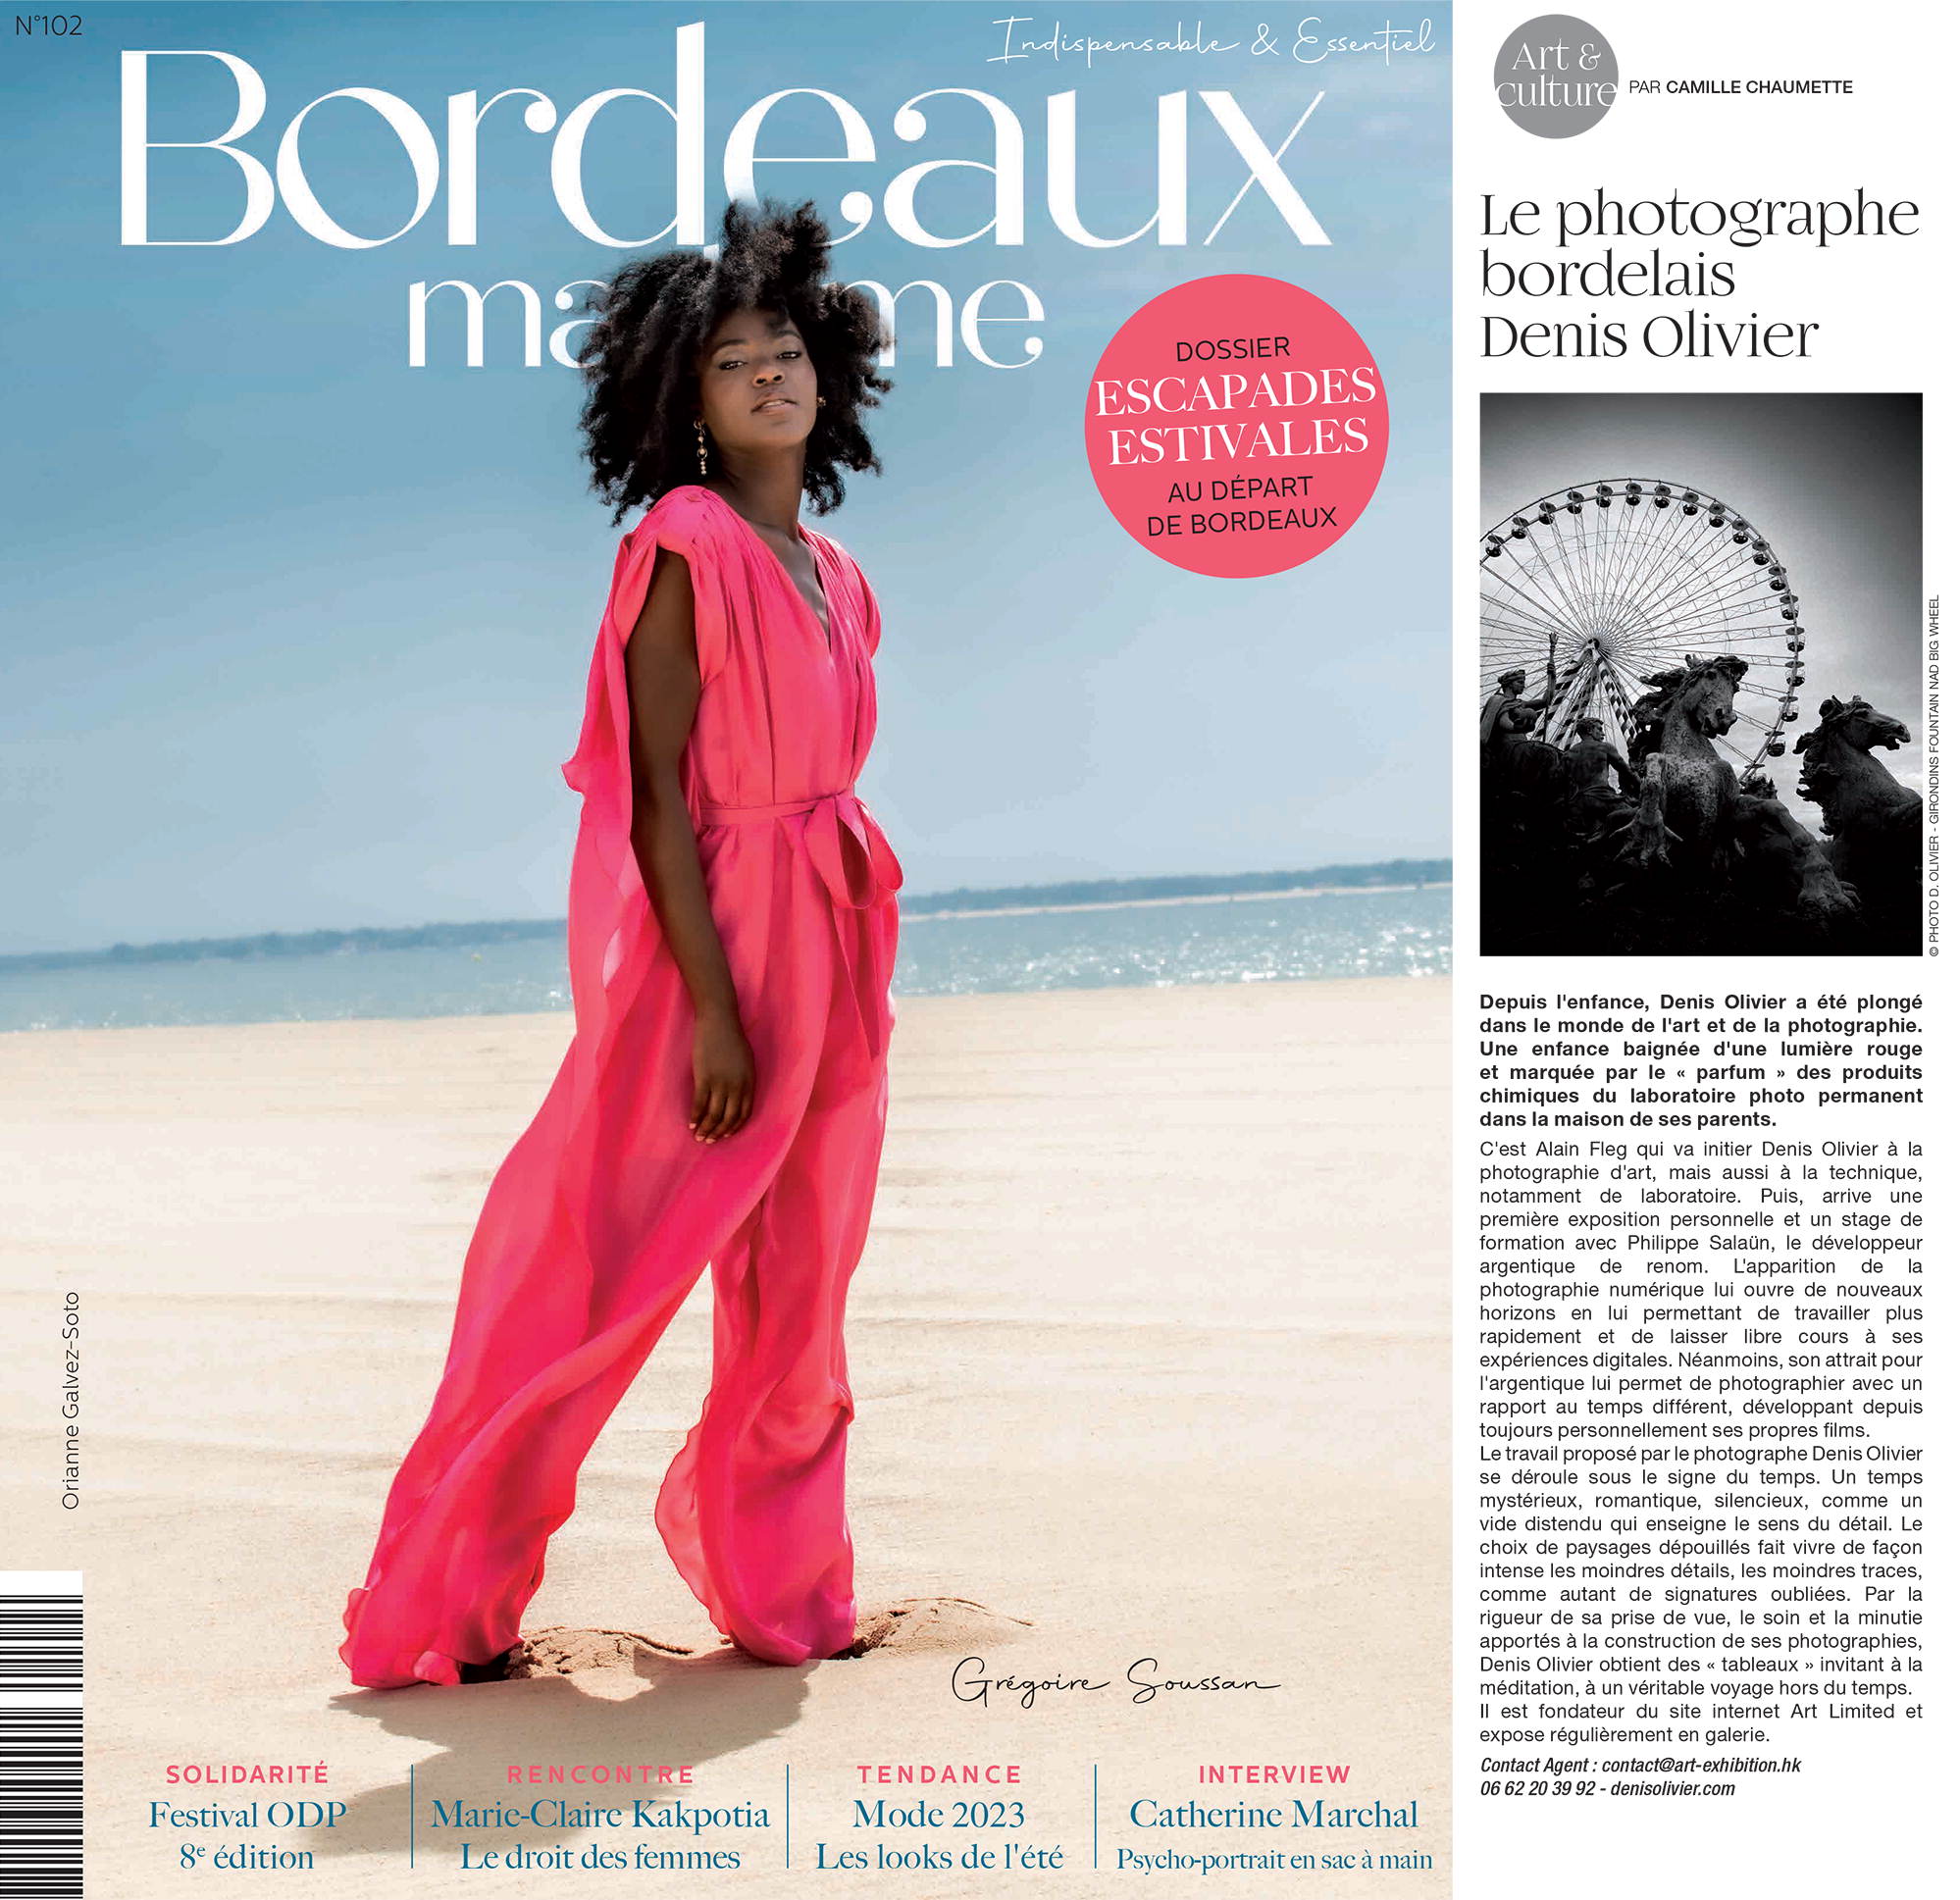 Bordeaux Madame issue 102